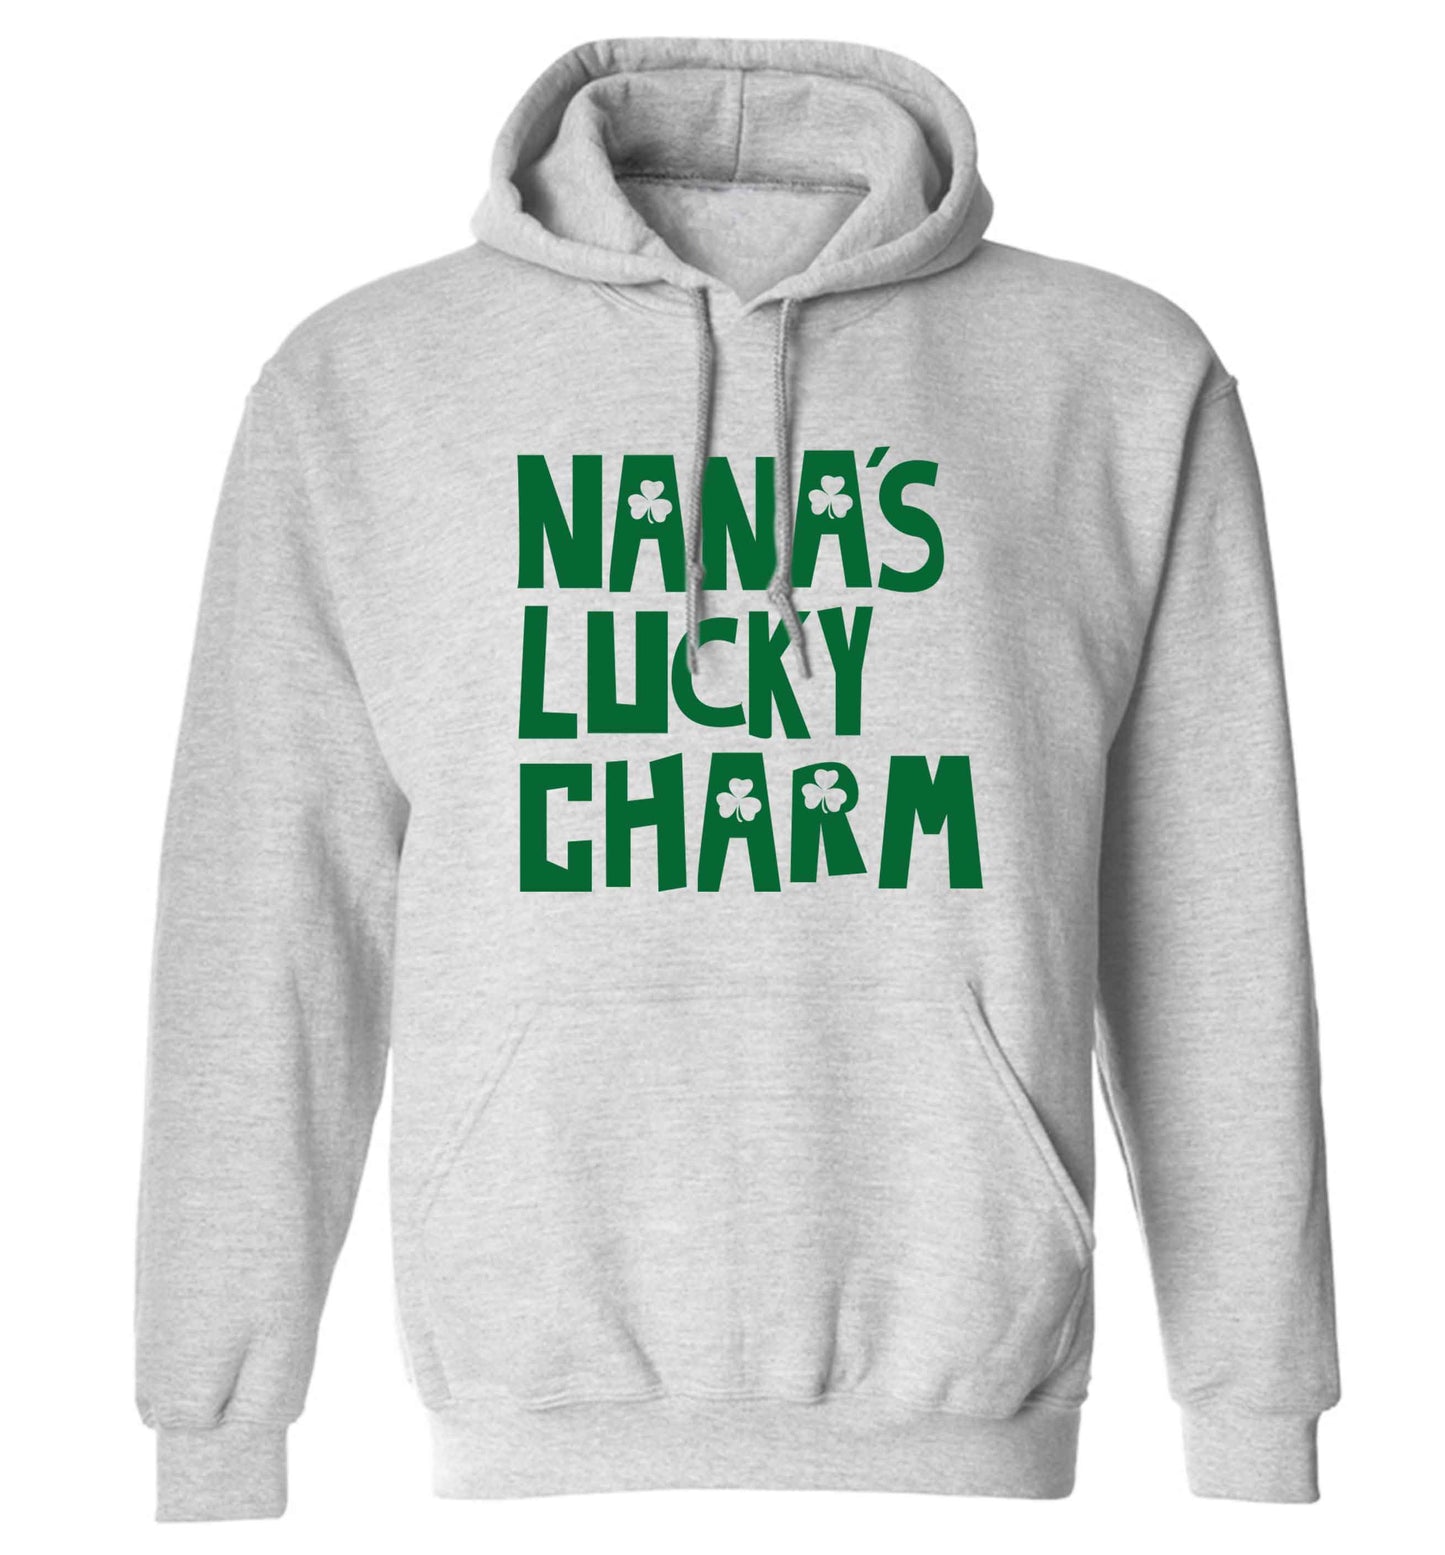 Nana's lucky charm adults unisex grey hoodie 2XL